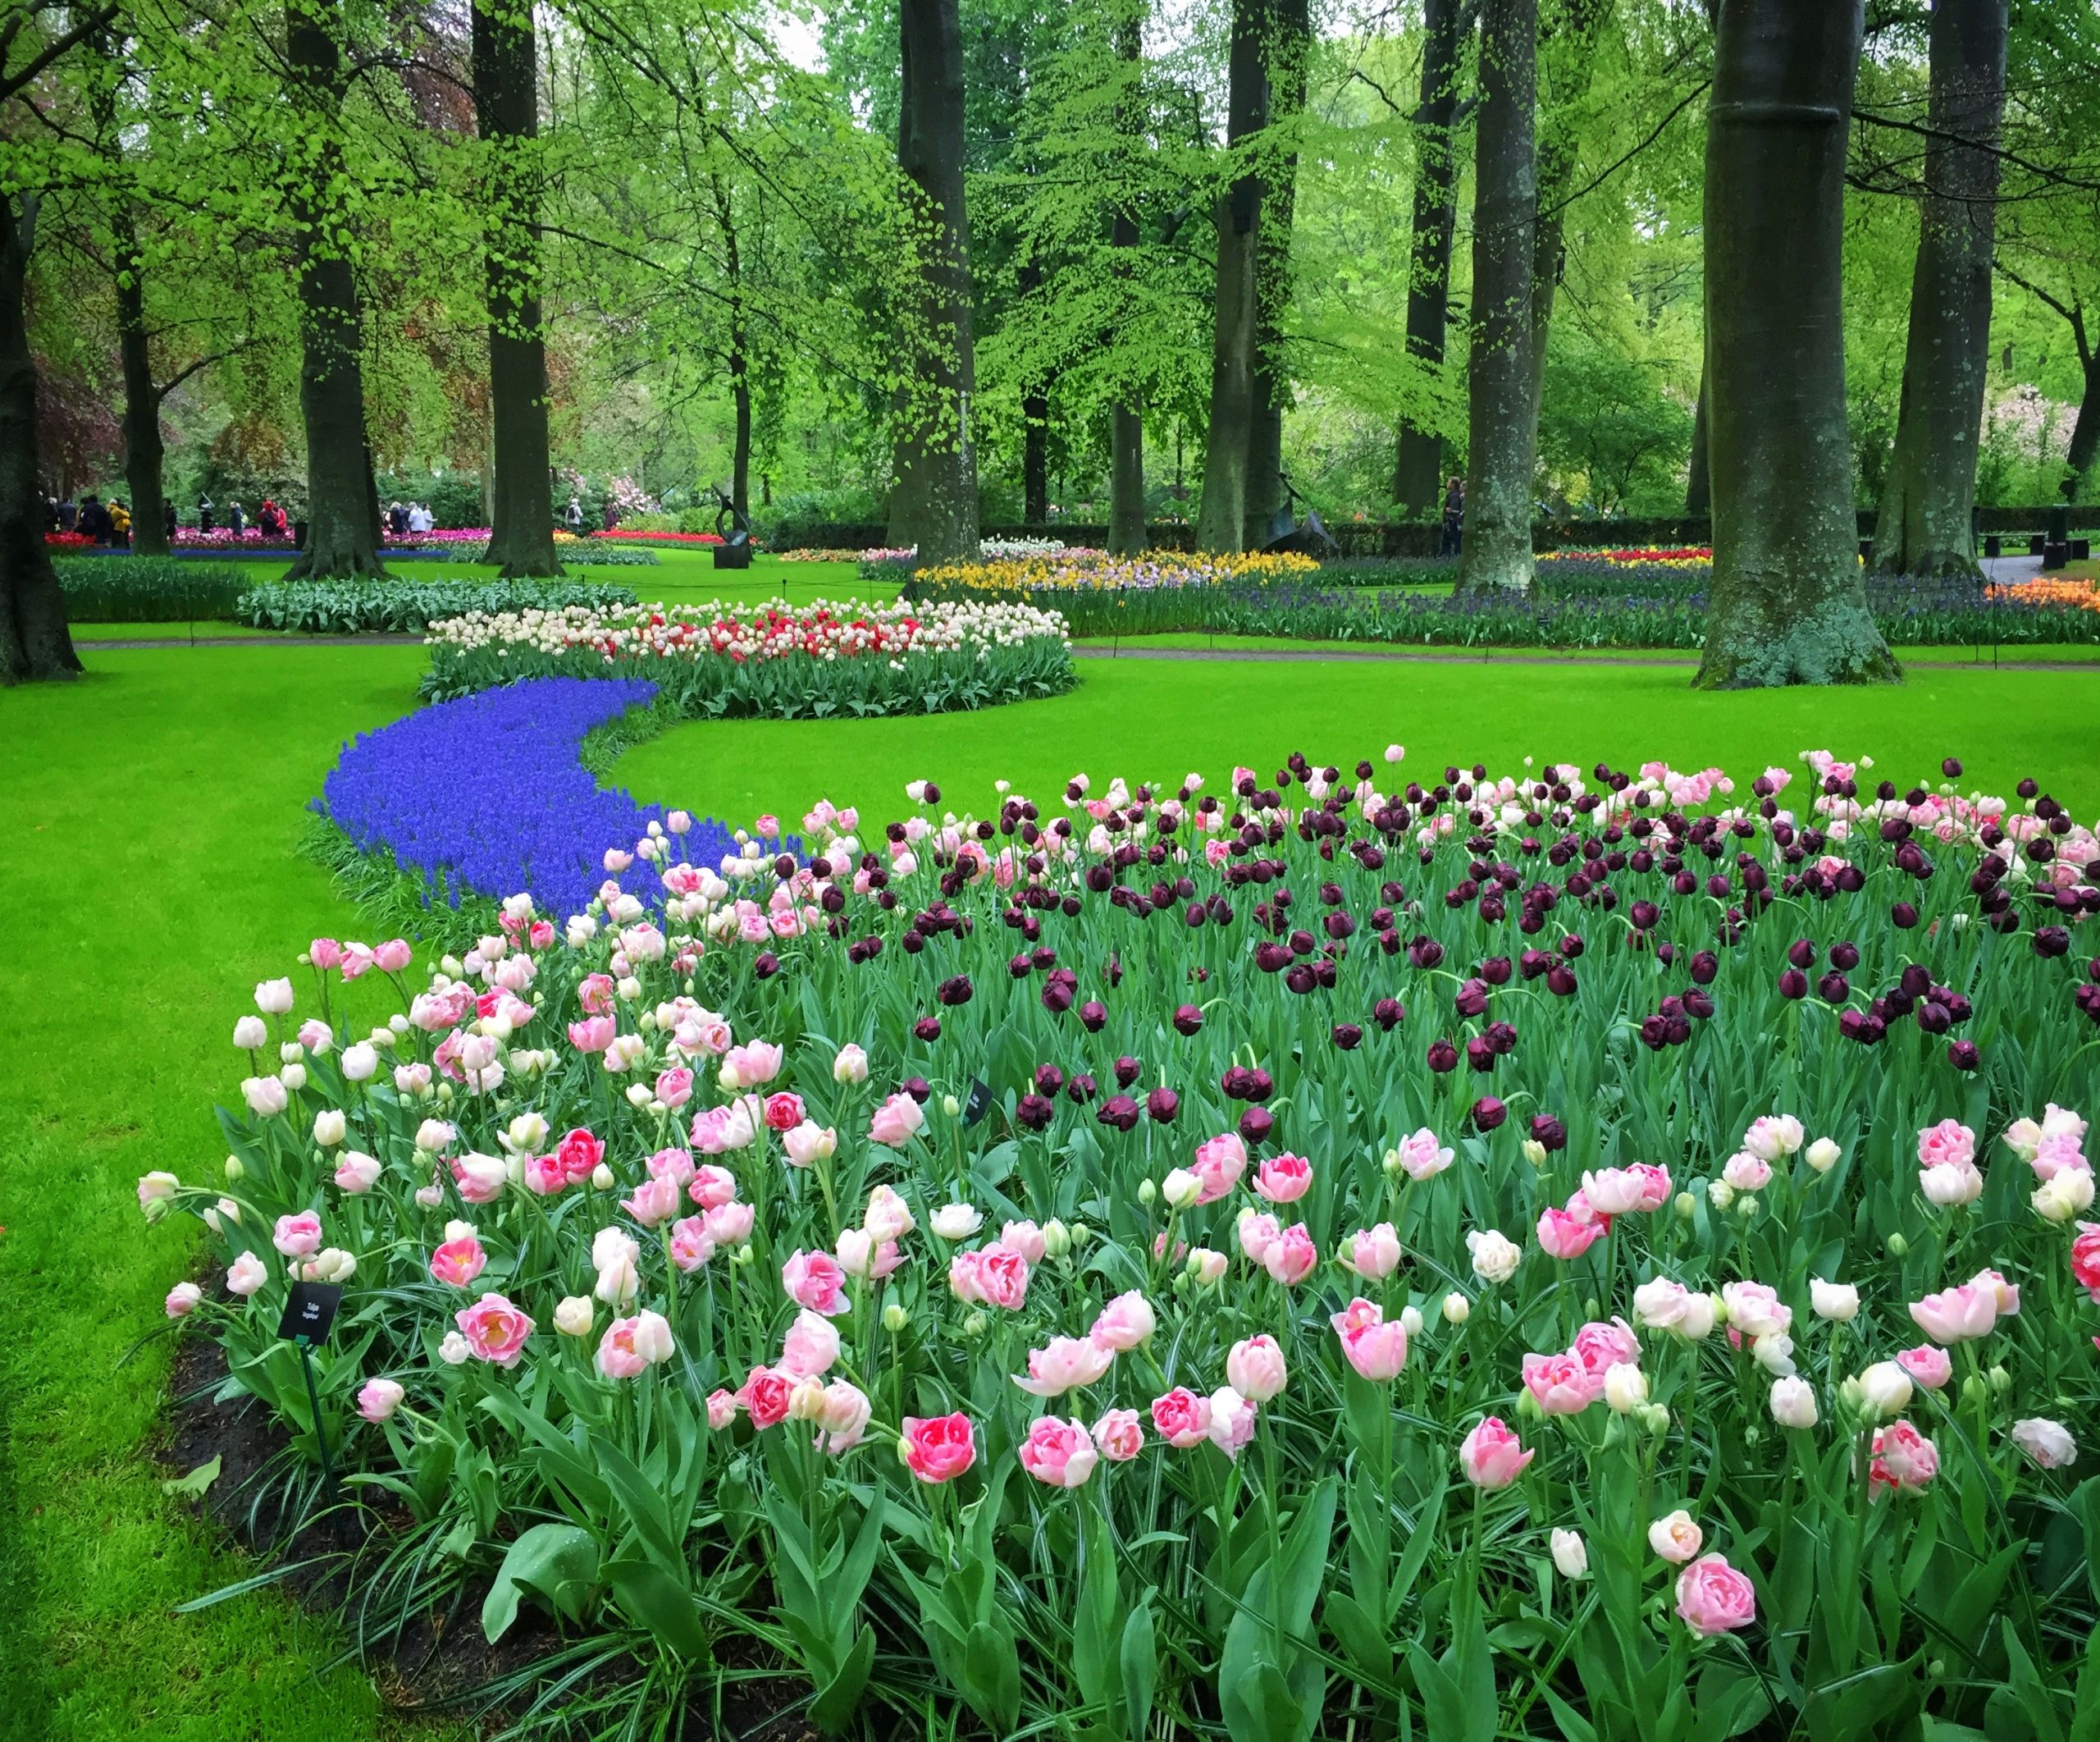 Tulips at Keukenhof gardens